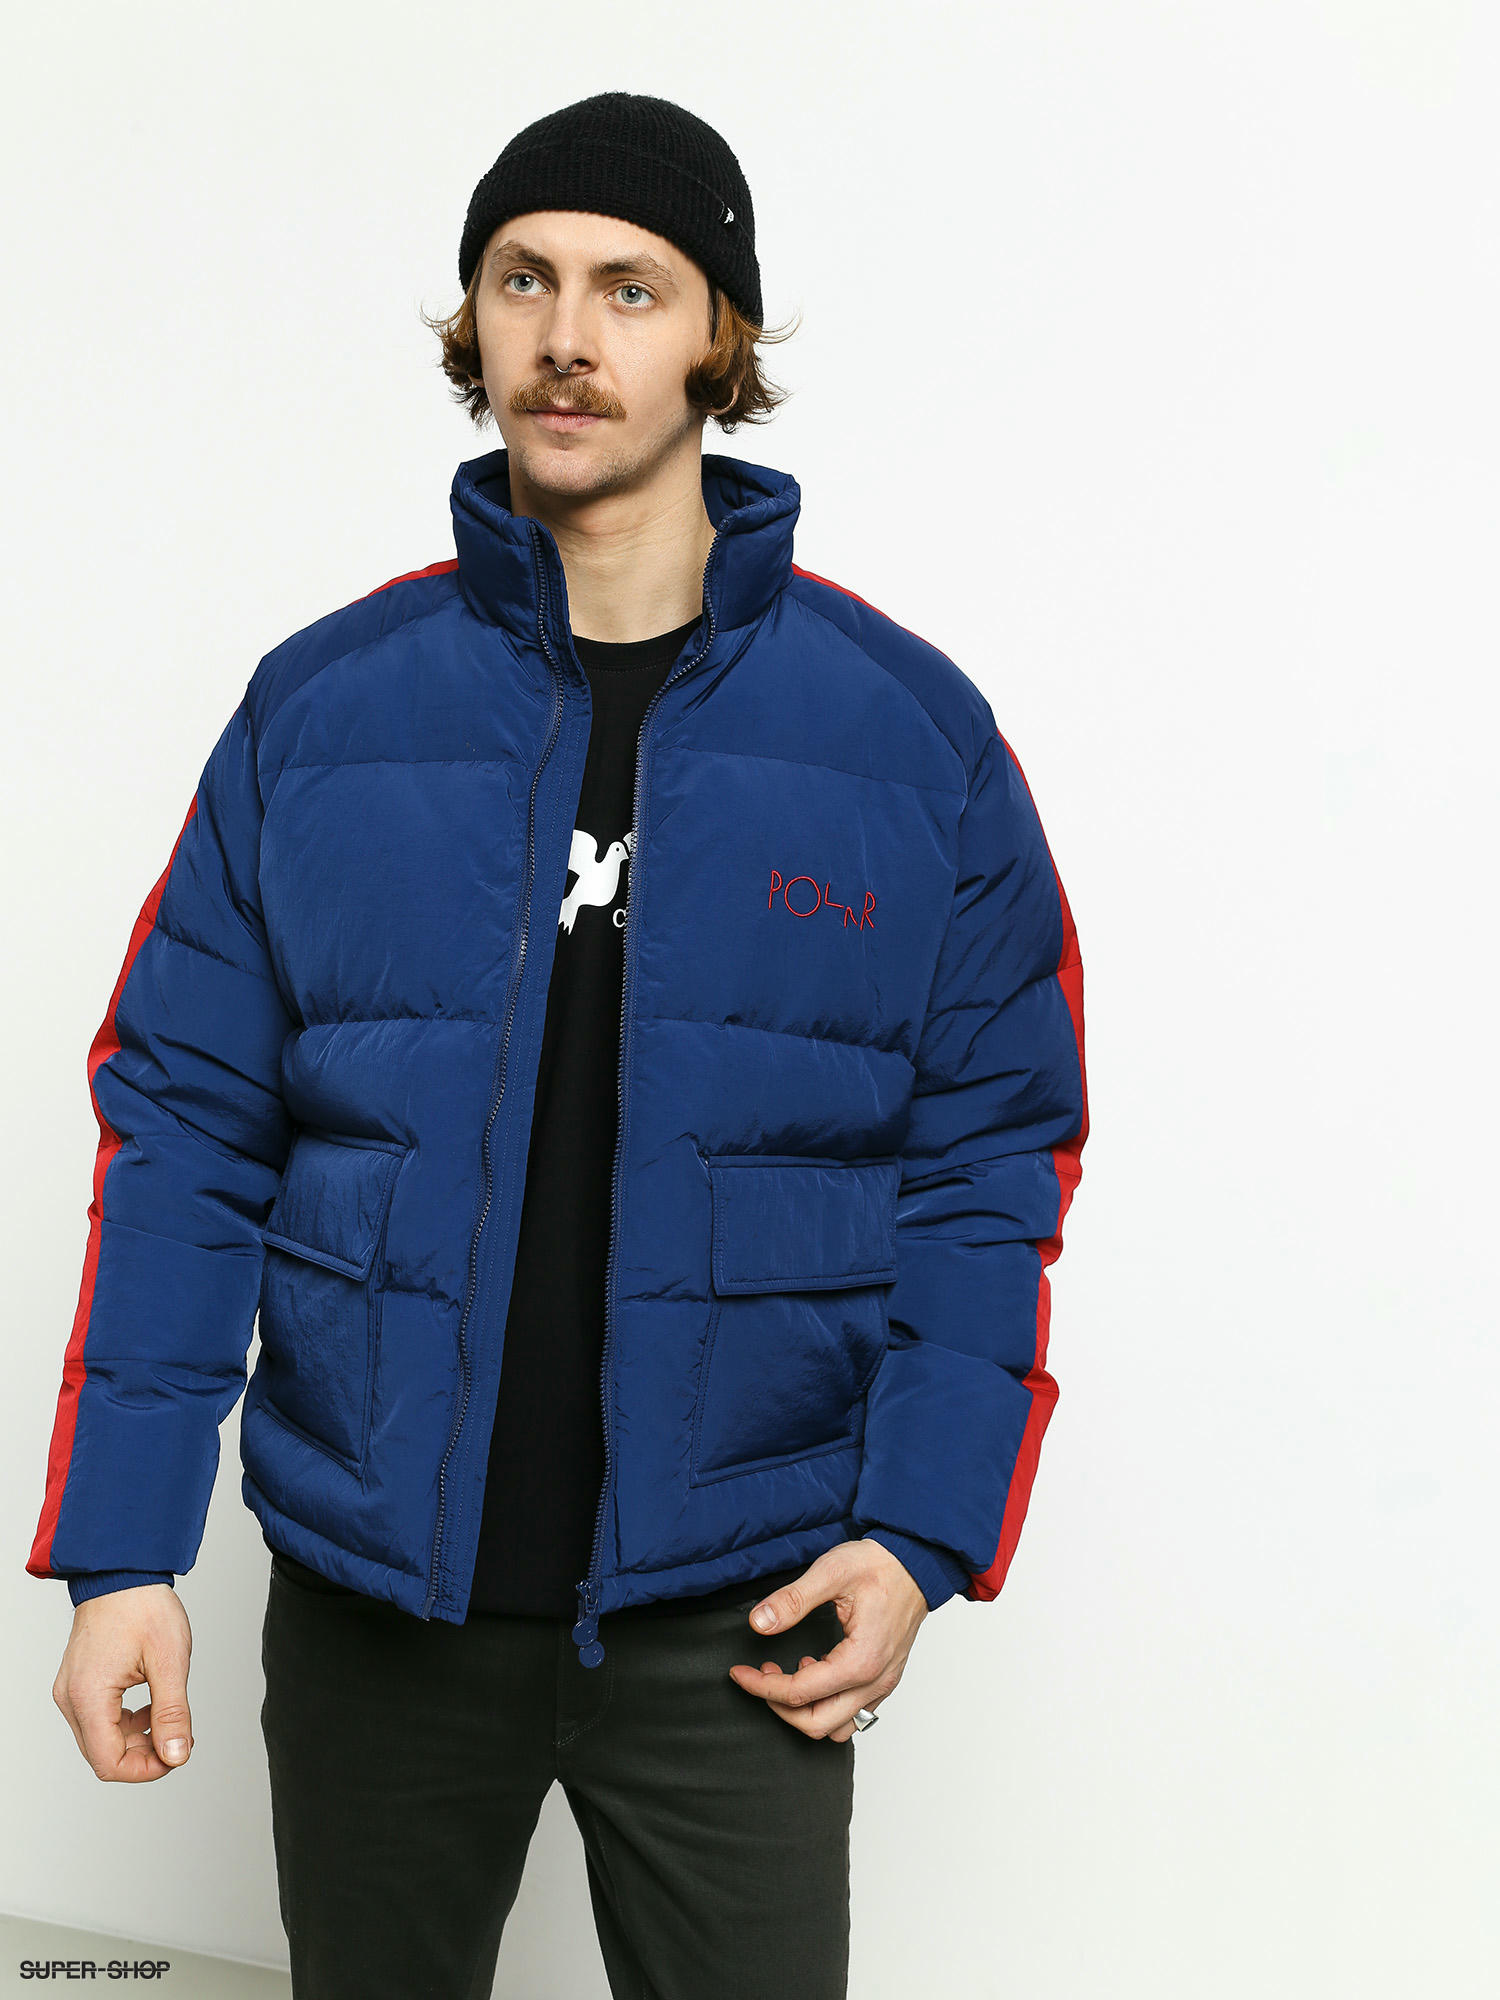 Polar Skate Stripe Puffer Jacket (navy/red)